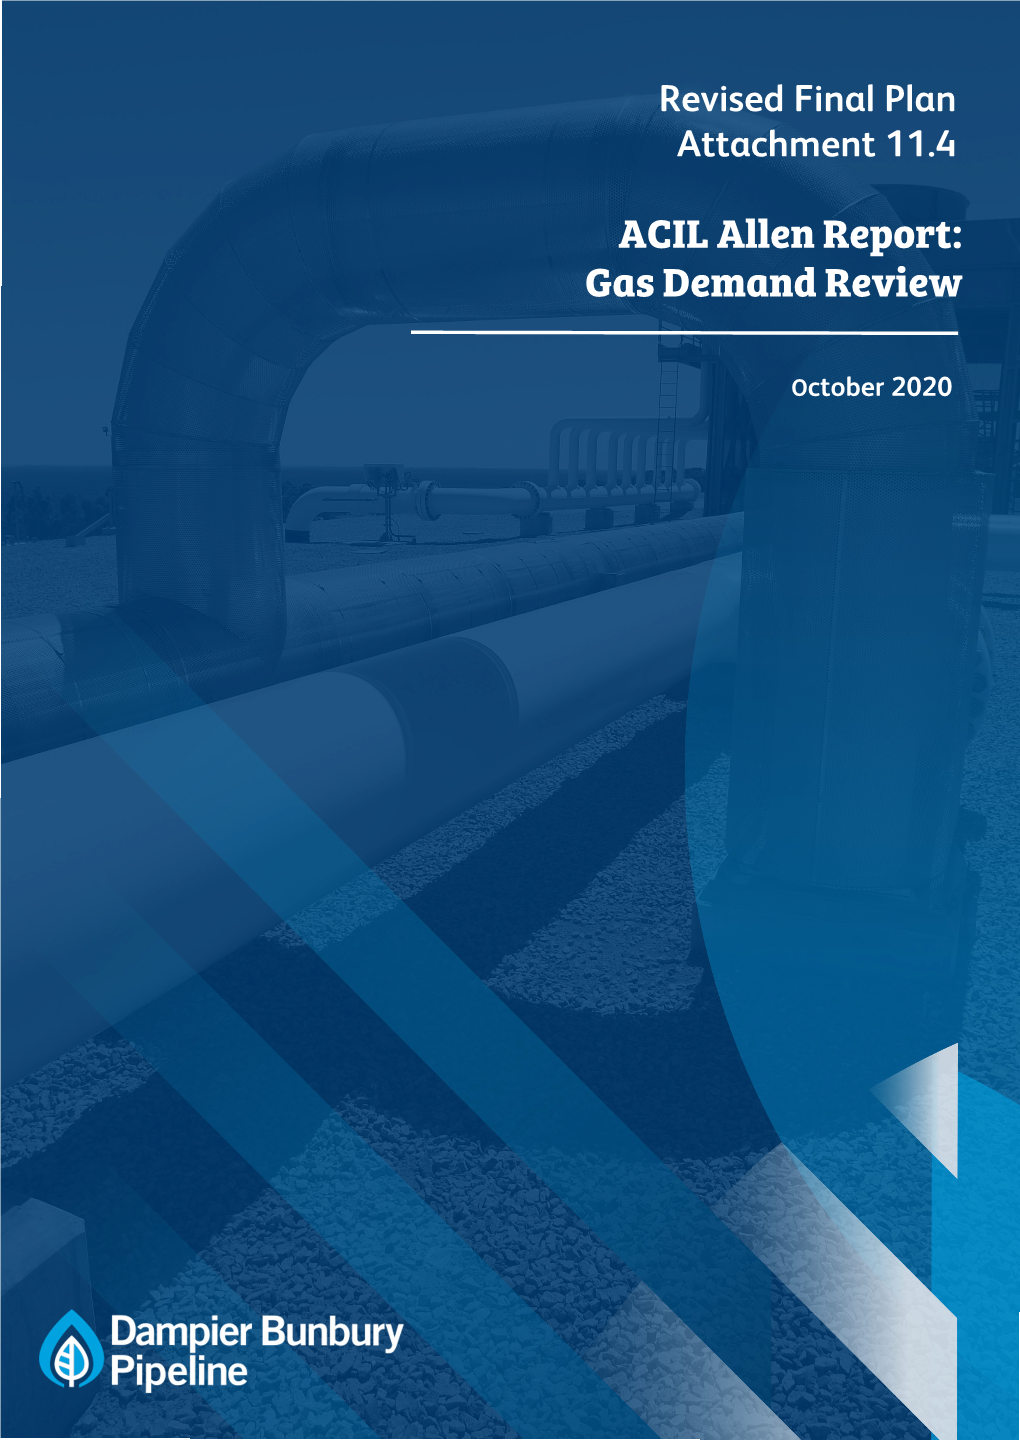 ACIL Allen Report: Gas Demand Review